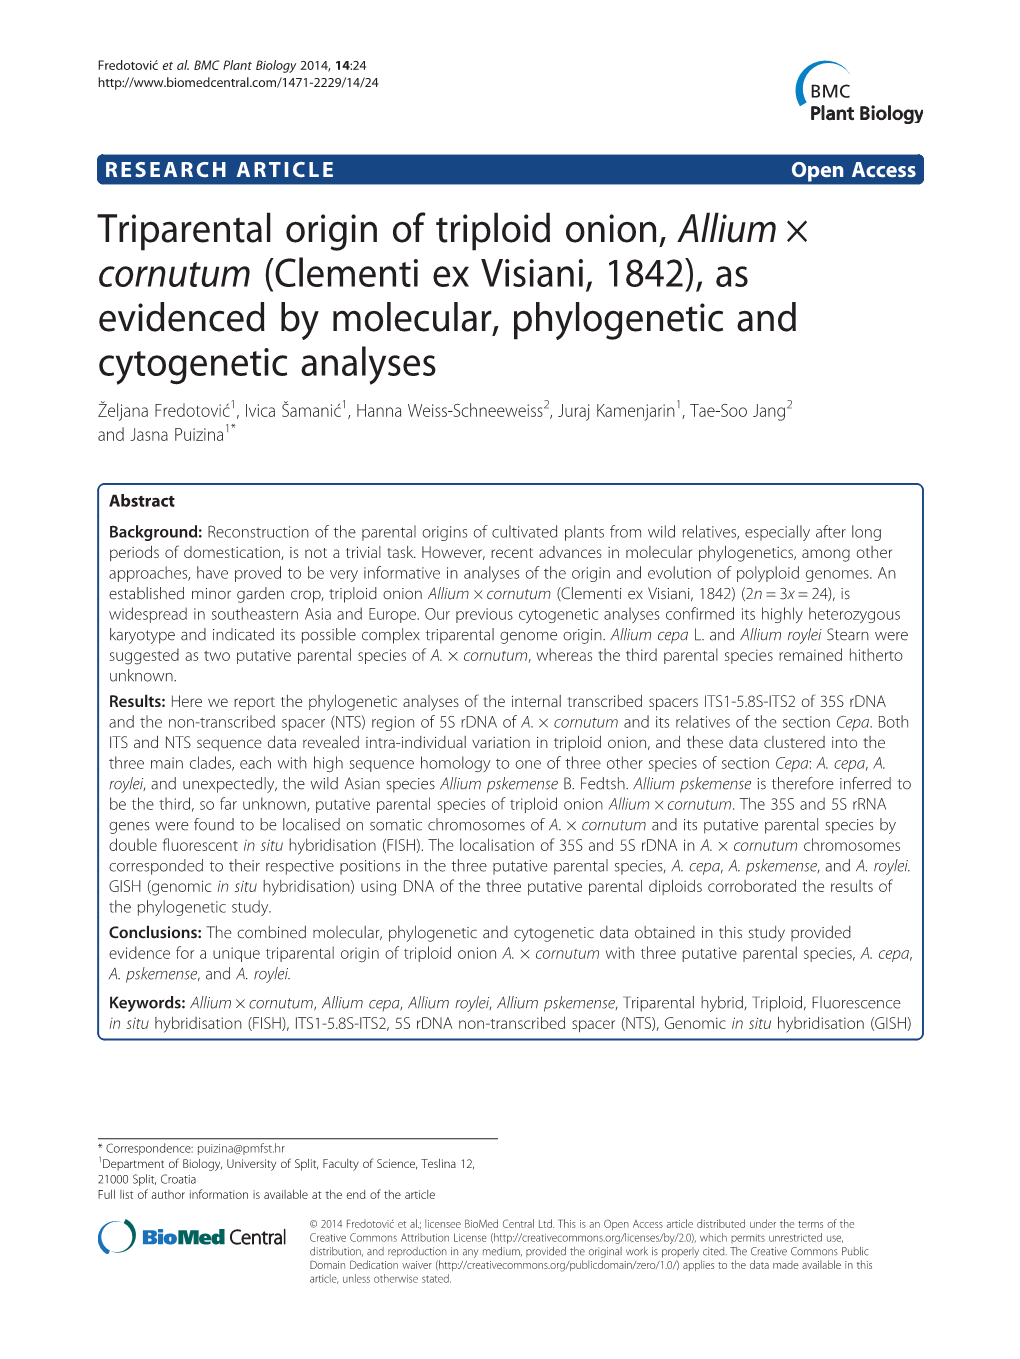 Triparental Origin of Triploid Onion, Allium